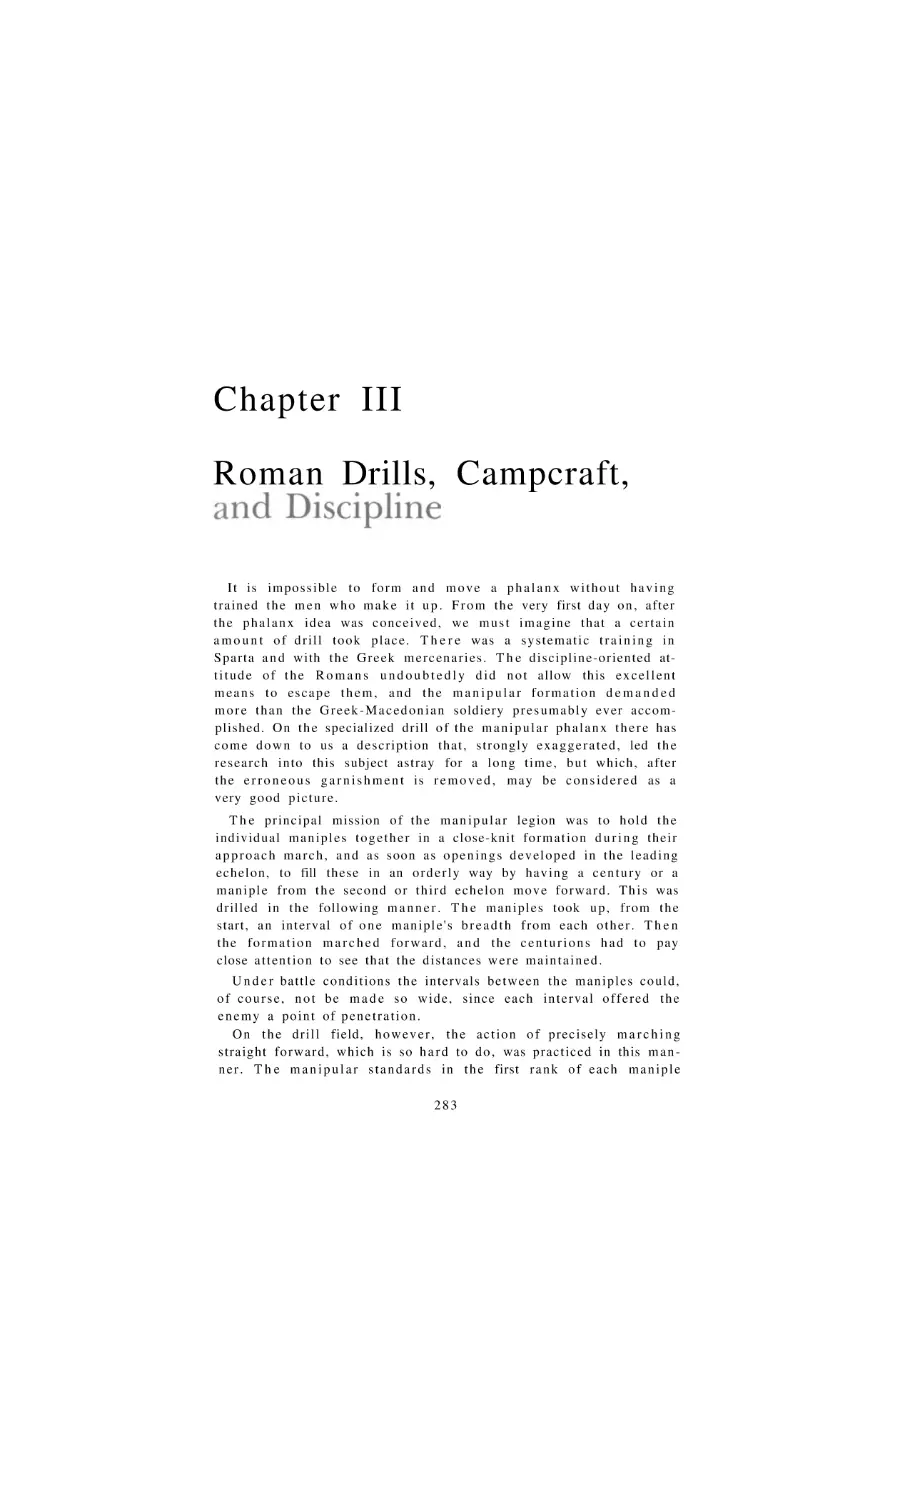 Roman Drill, Campcraft, and Discipline